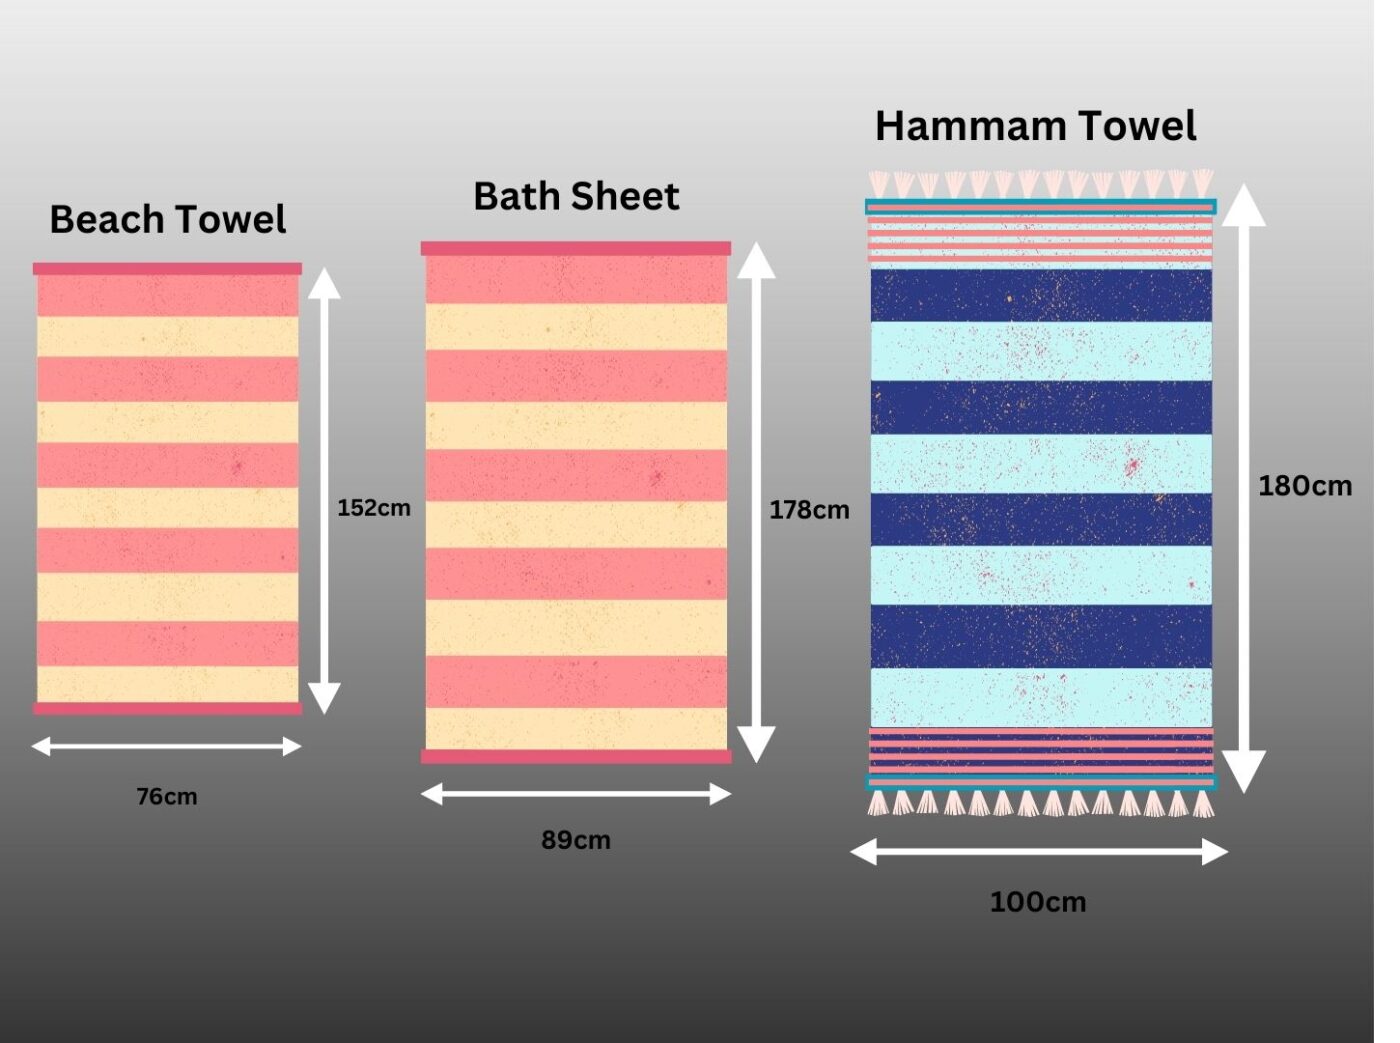 Bath Towel vs. Bath Sheet: How Do They Compare?